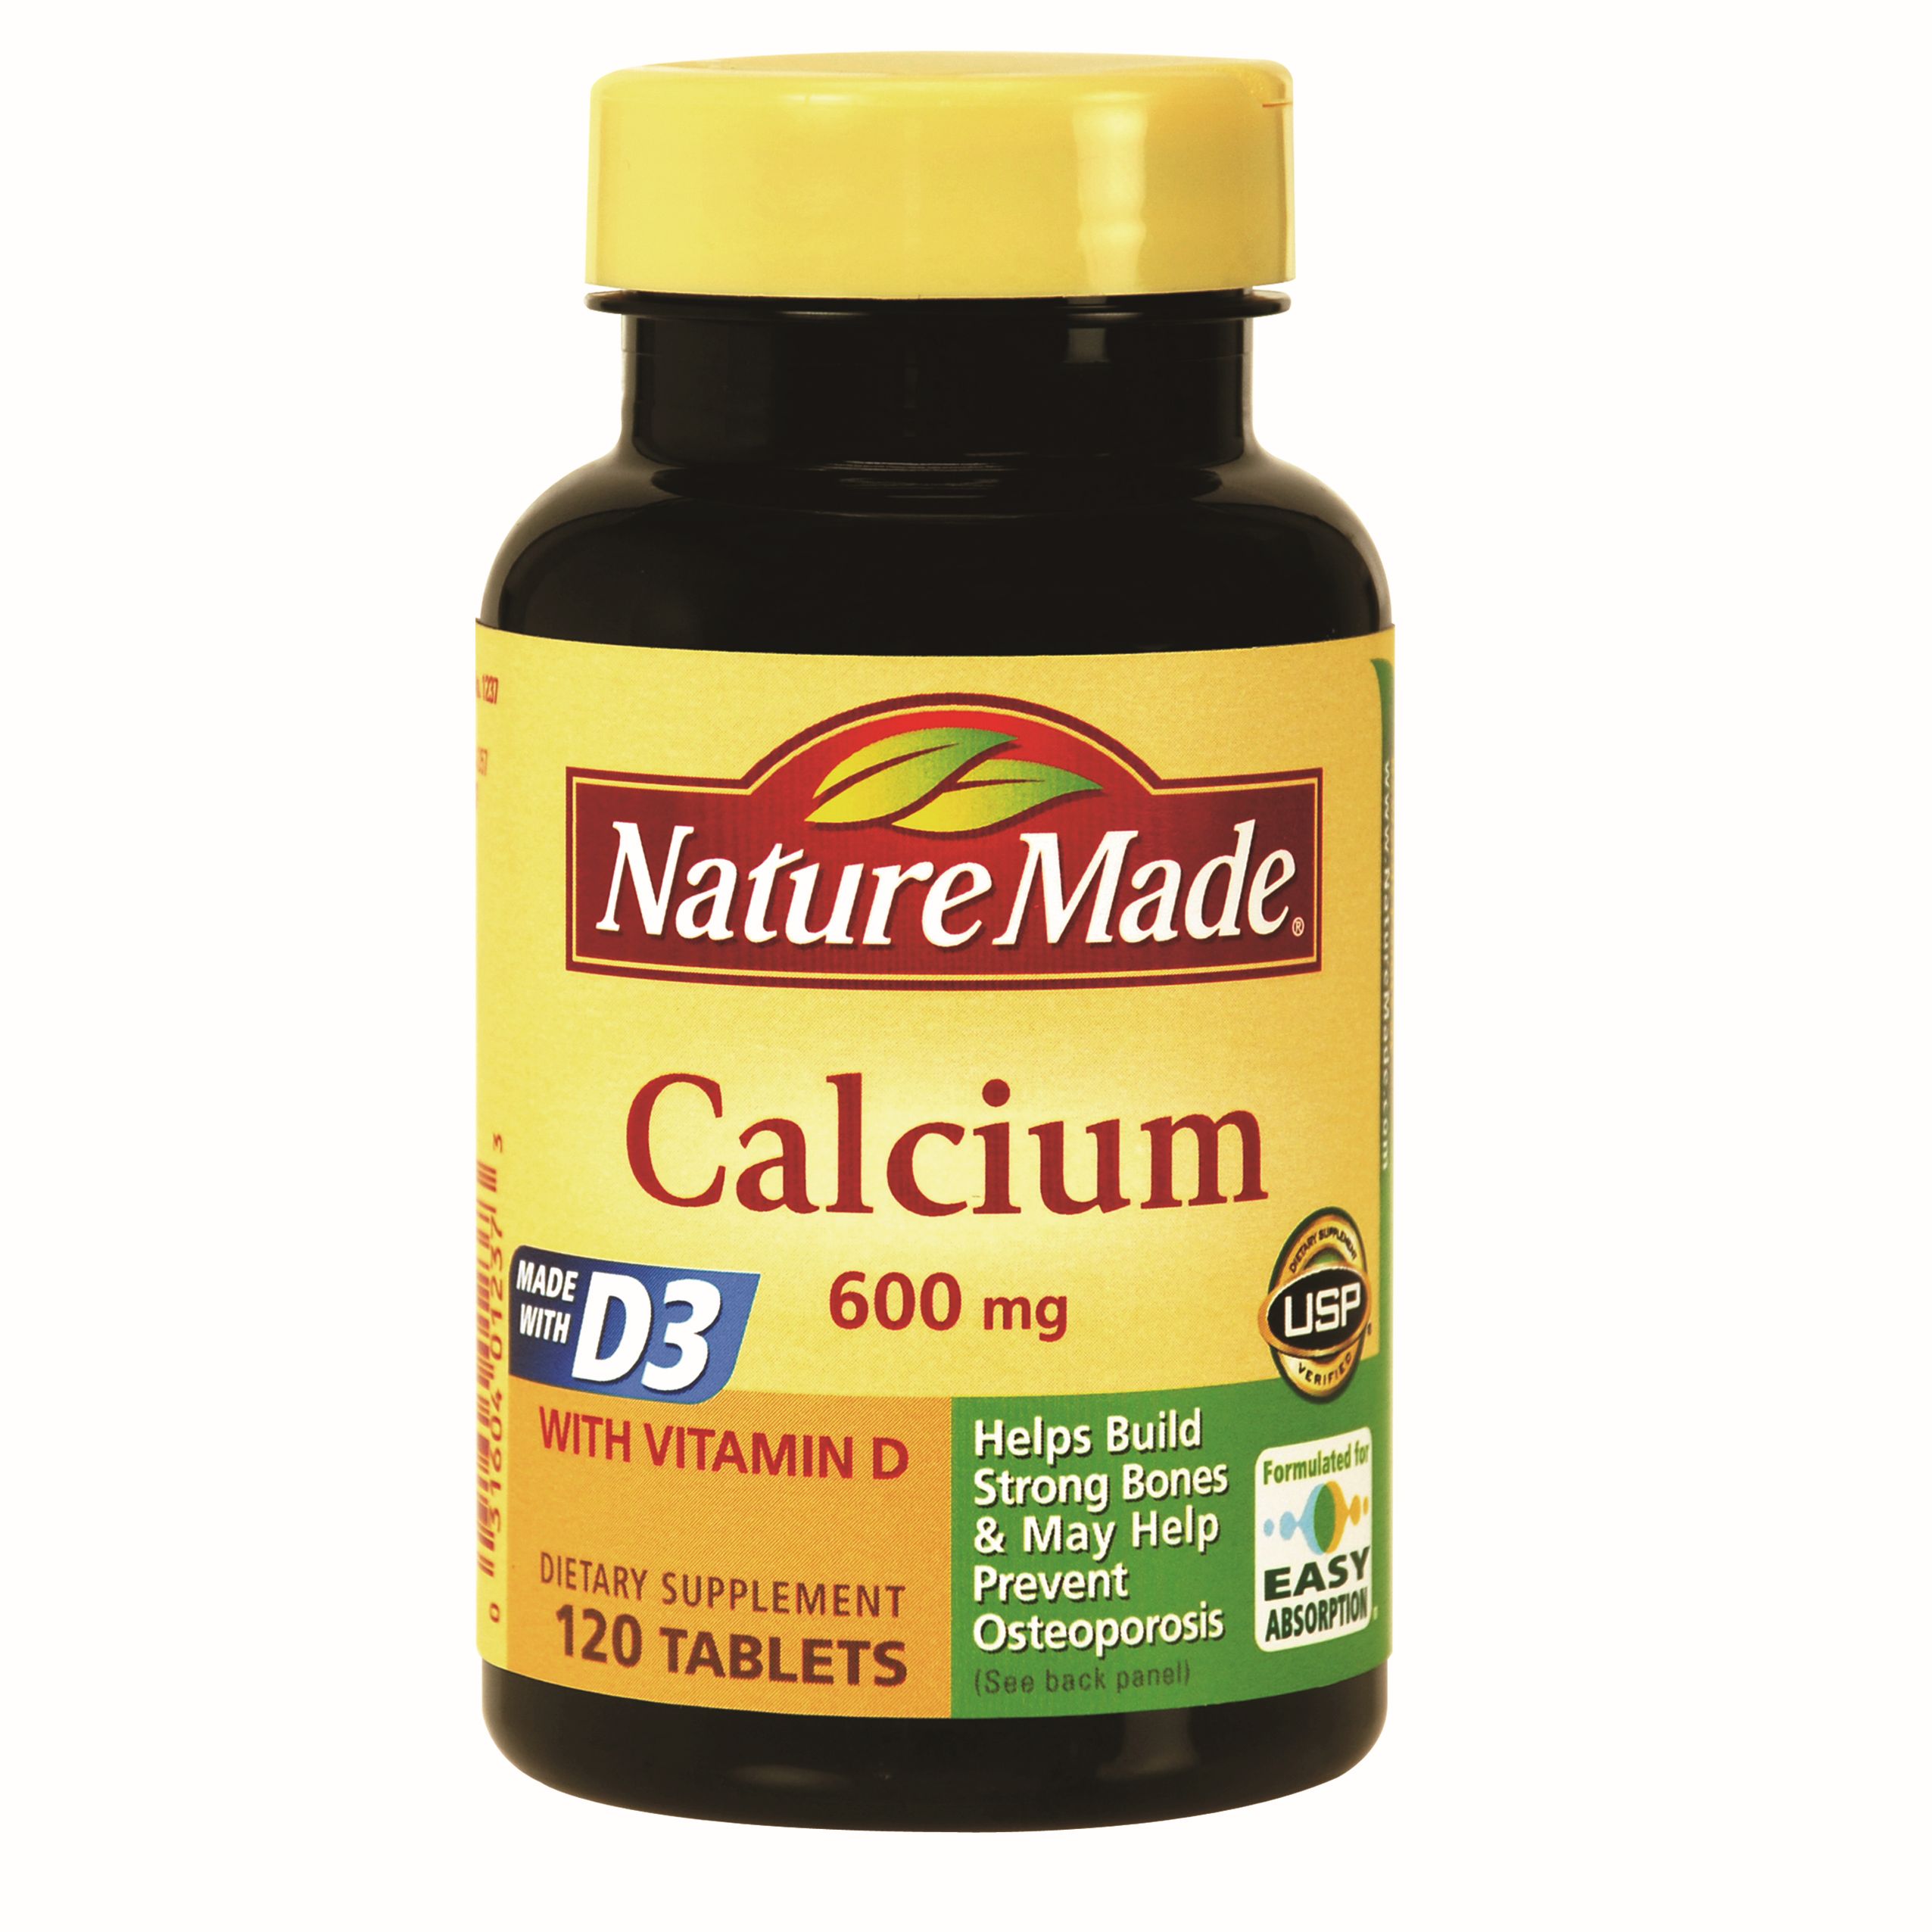 Витамин д3 90 капсул. Кальциум 600 витамин д3. Calcium with Vitamin d3. Calcium Citrate with Vitamin d3 1500. Витамин d3 Calcium +кальций ATECH nut 90 кап.